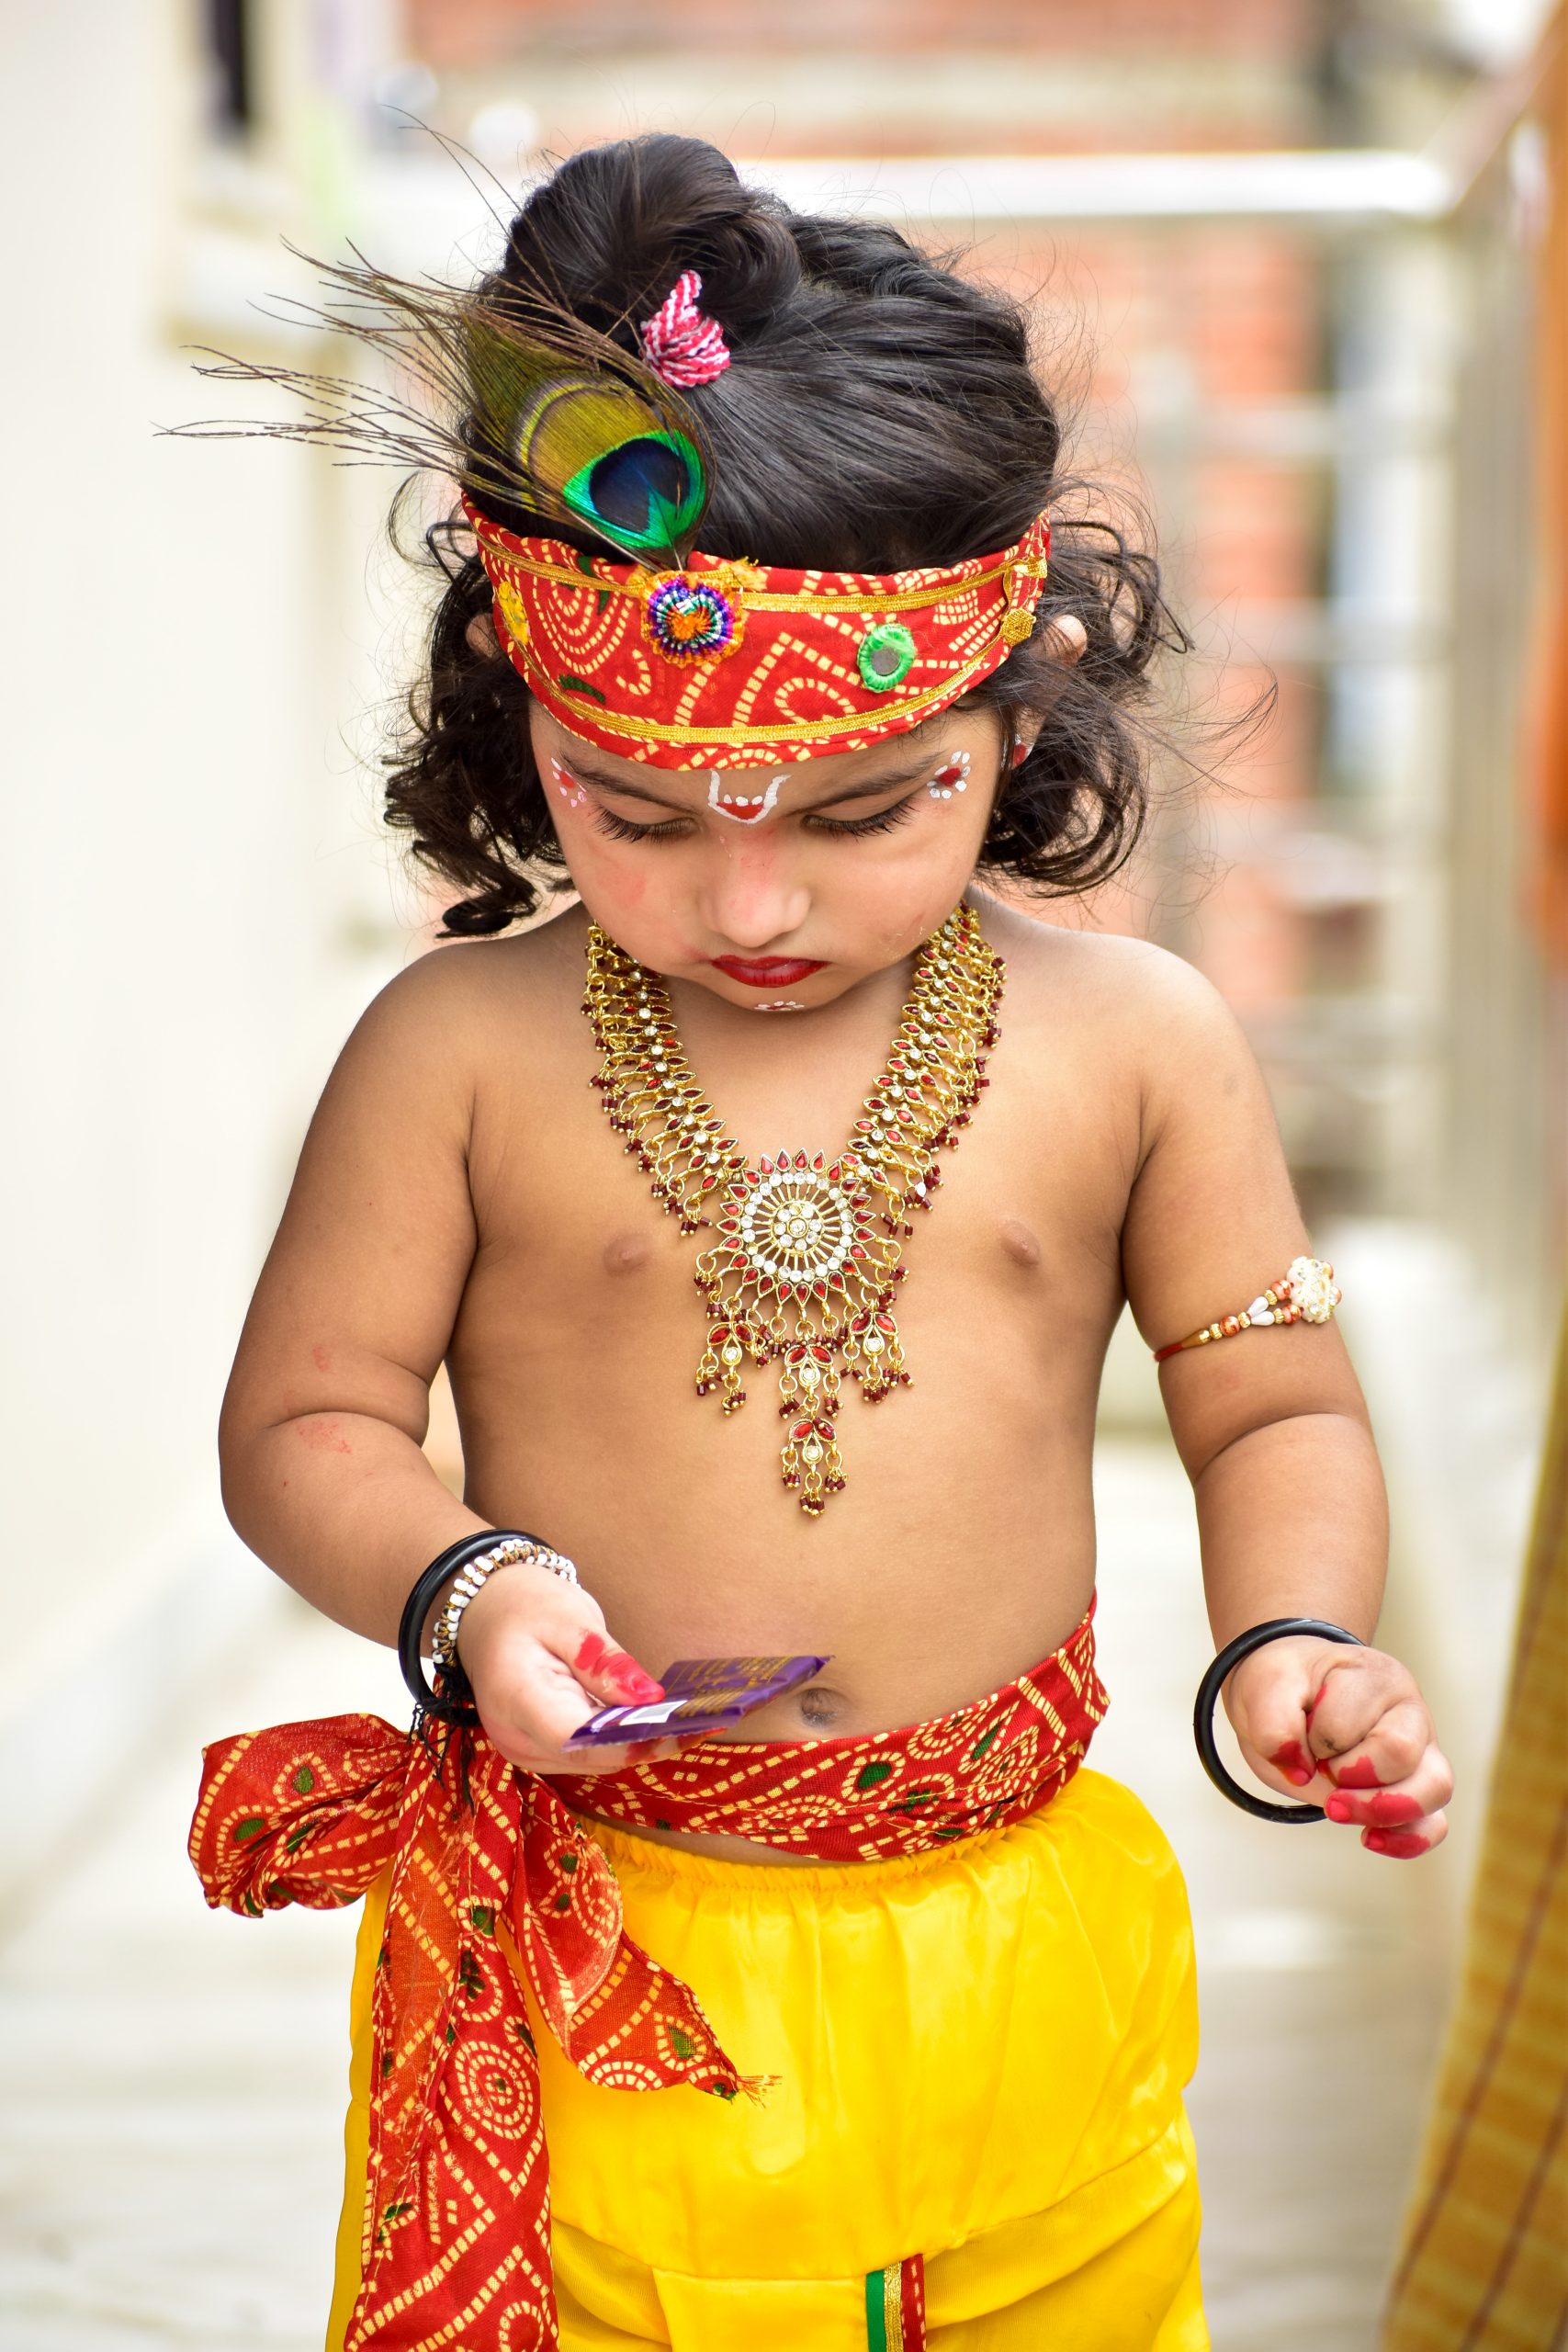 Baby dressed as Krishna holding chocolate